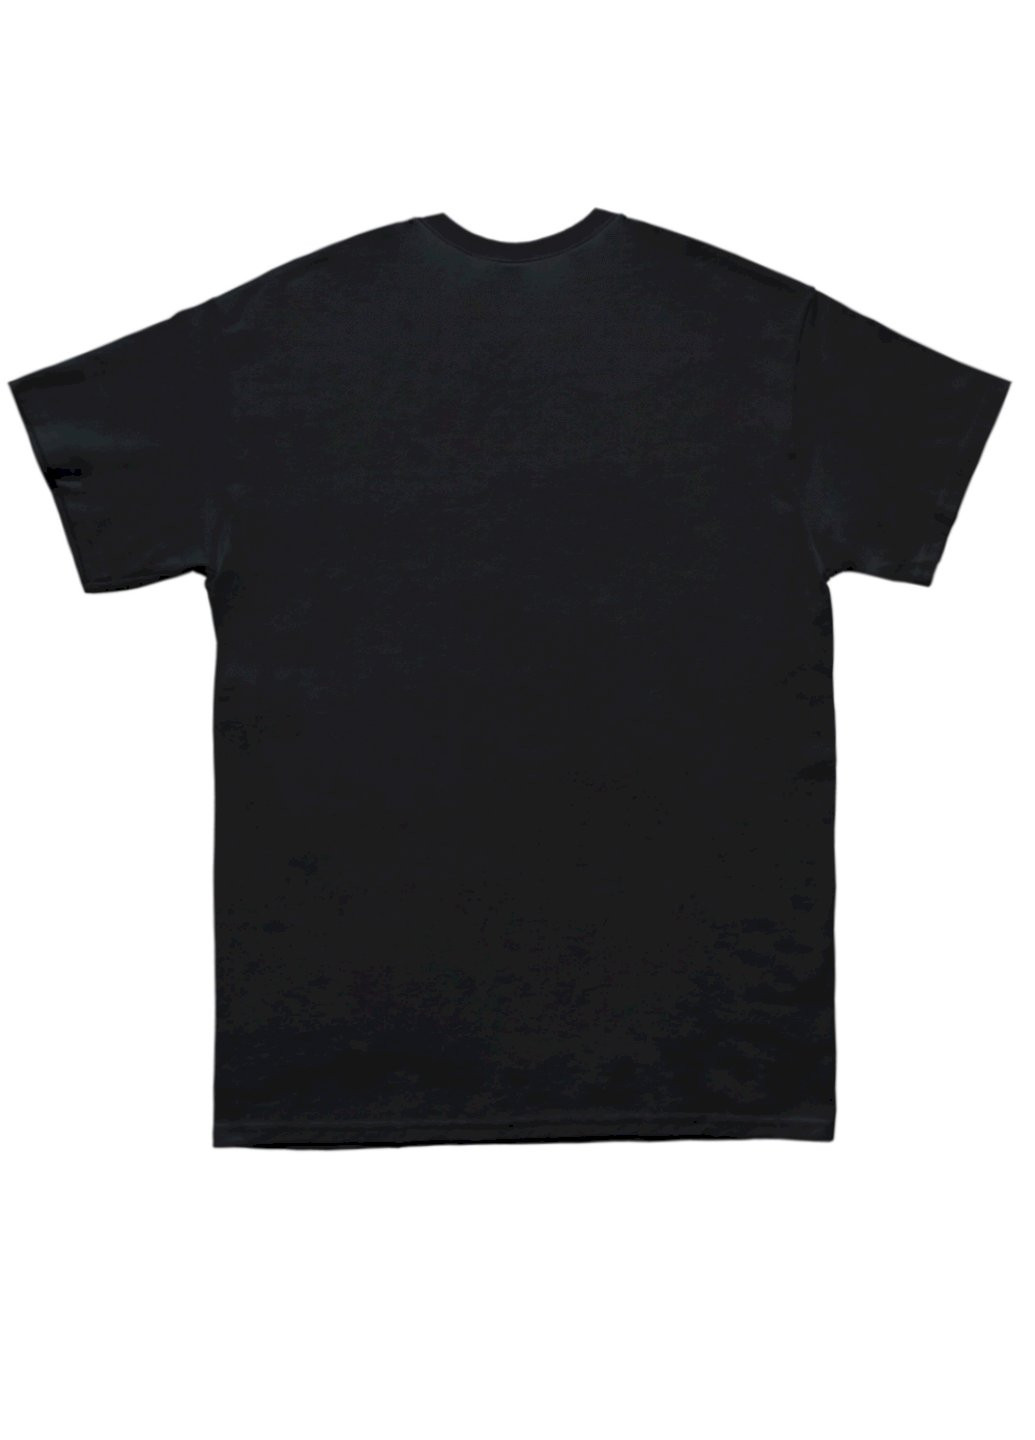 Черная футболка мужская черная "mars" Trace of Space